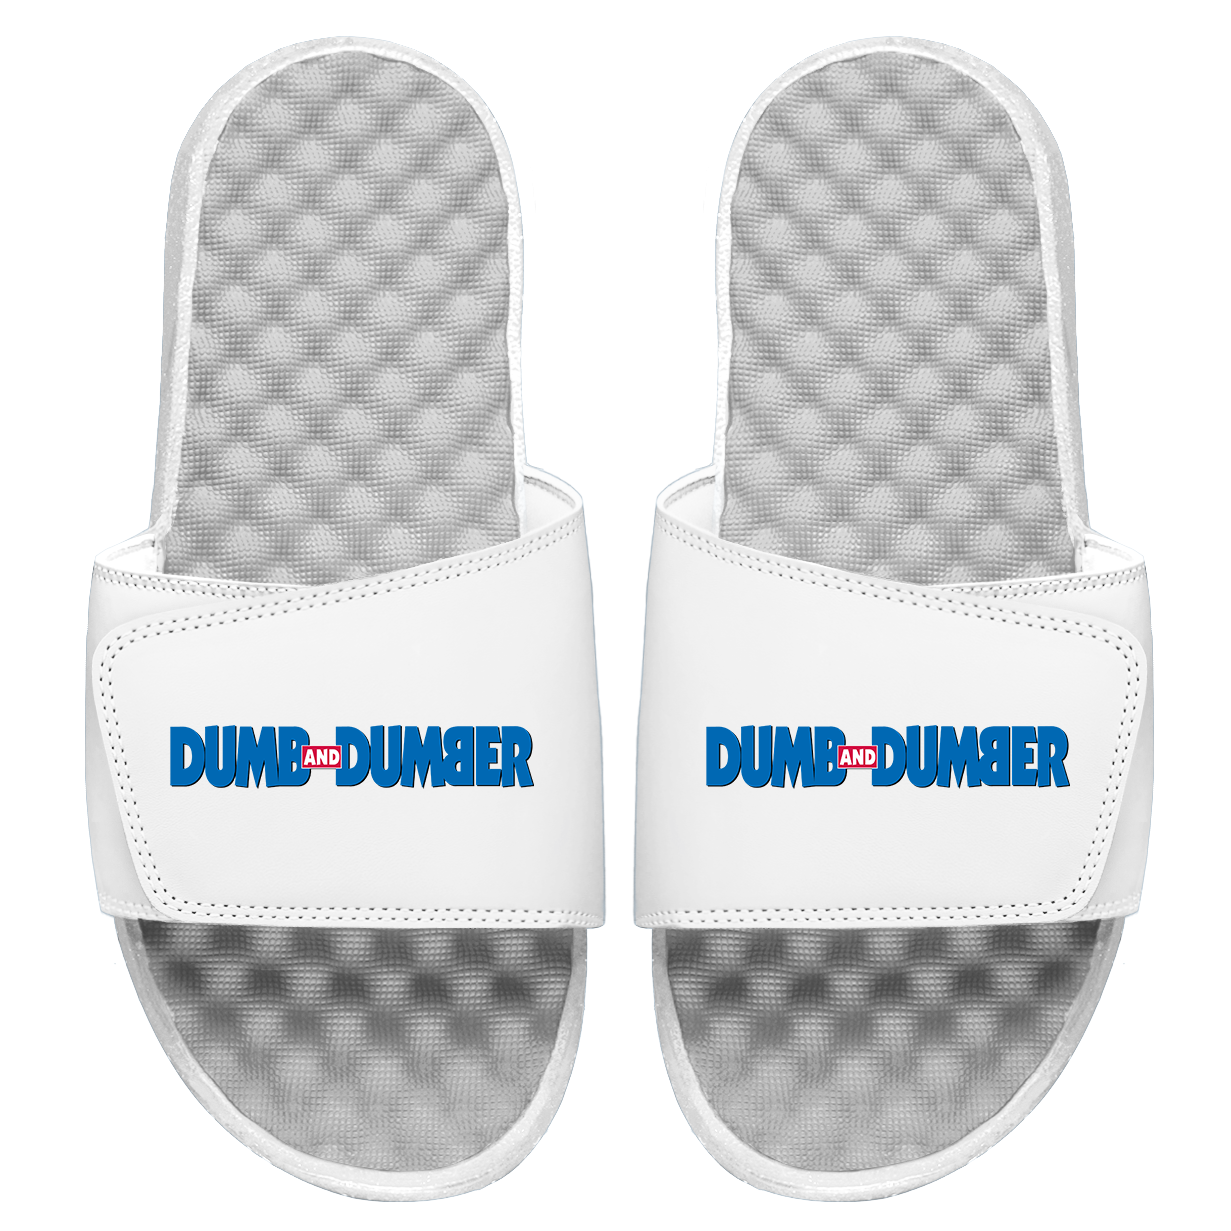 Dumb and Dumber Slides